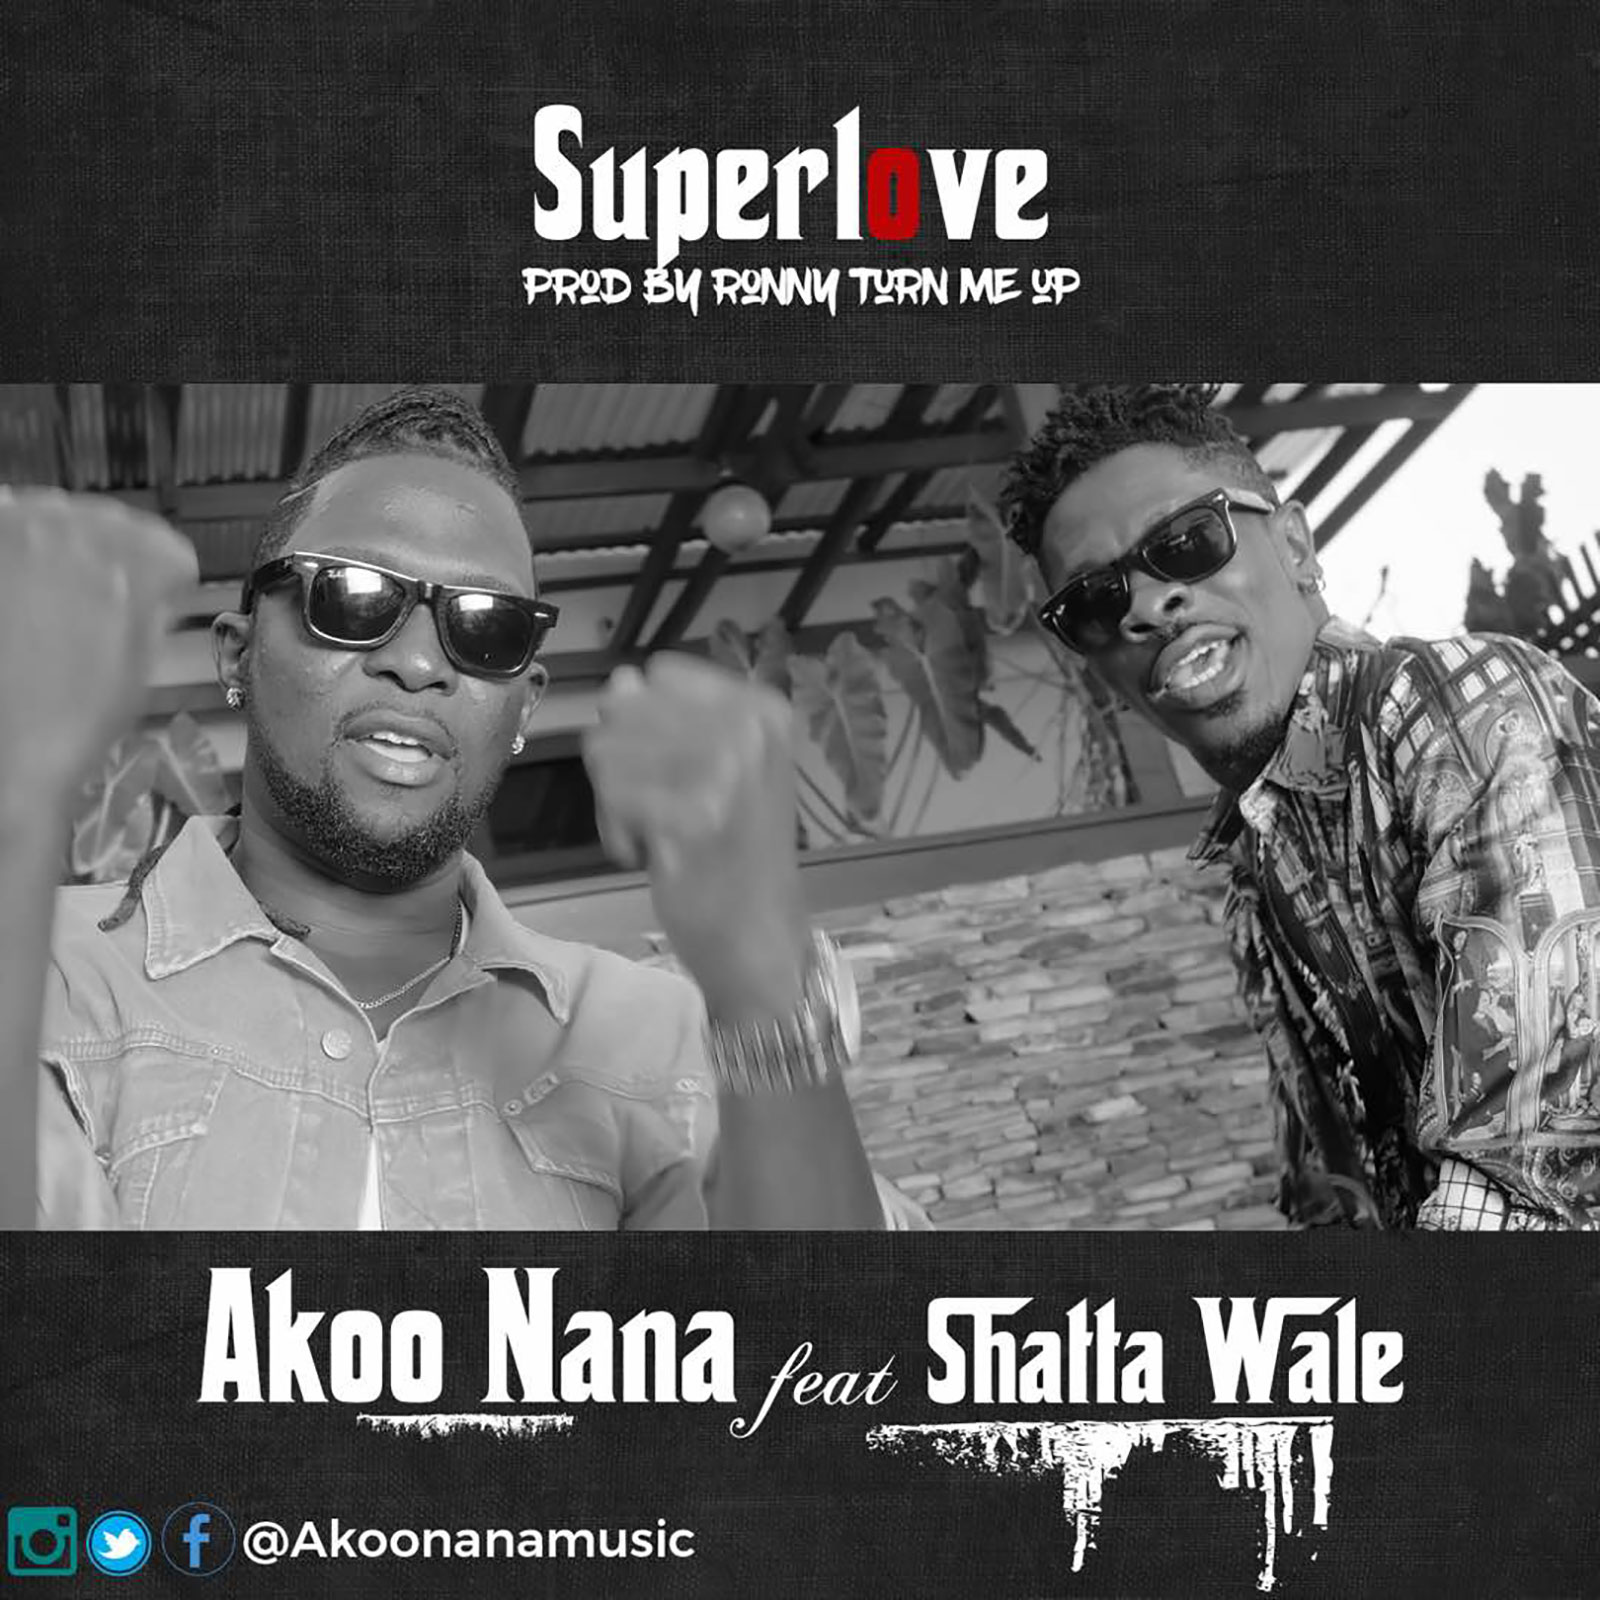 Super Love by Akoo Nana feat. Shatta Wale